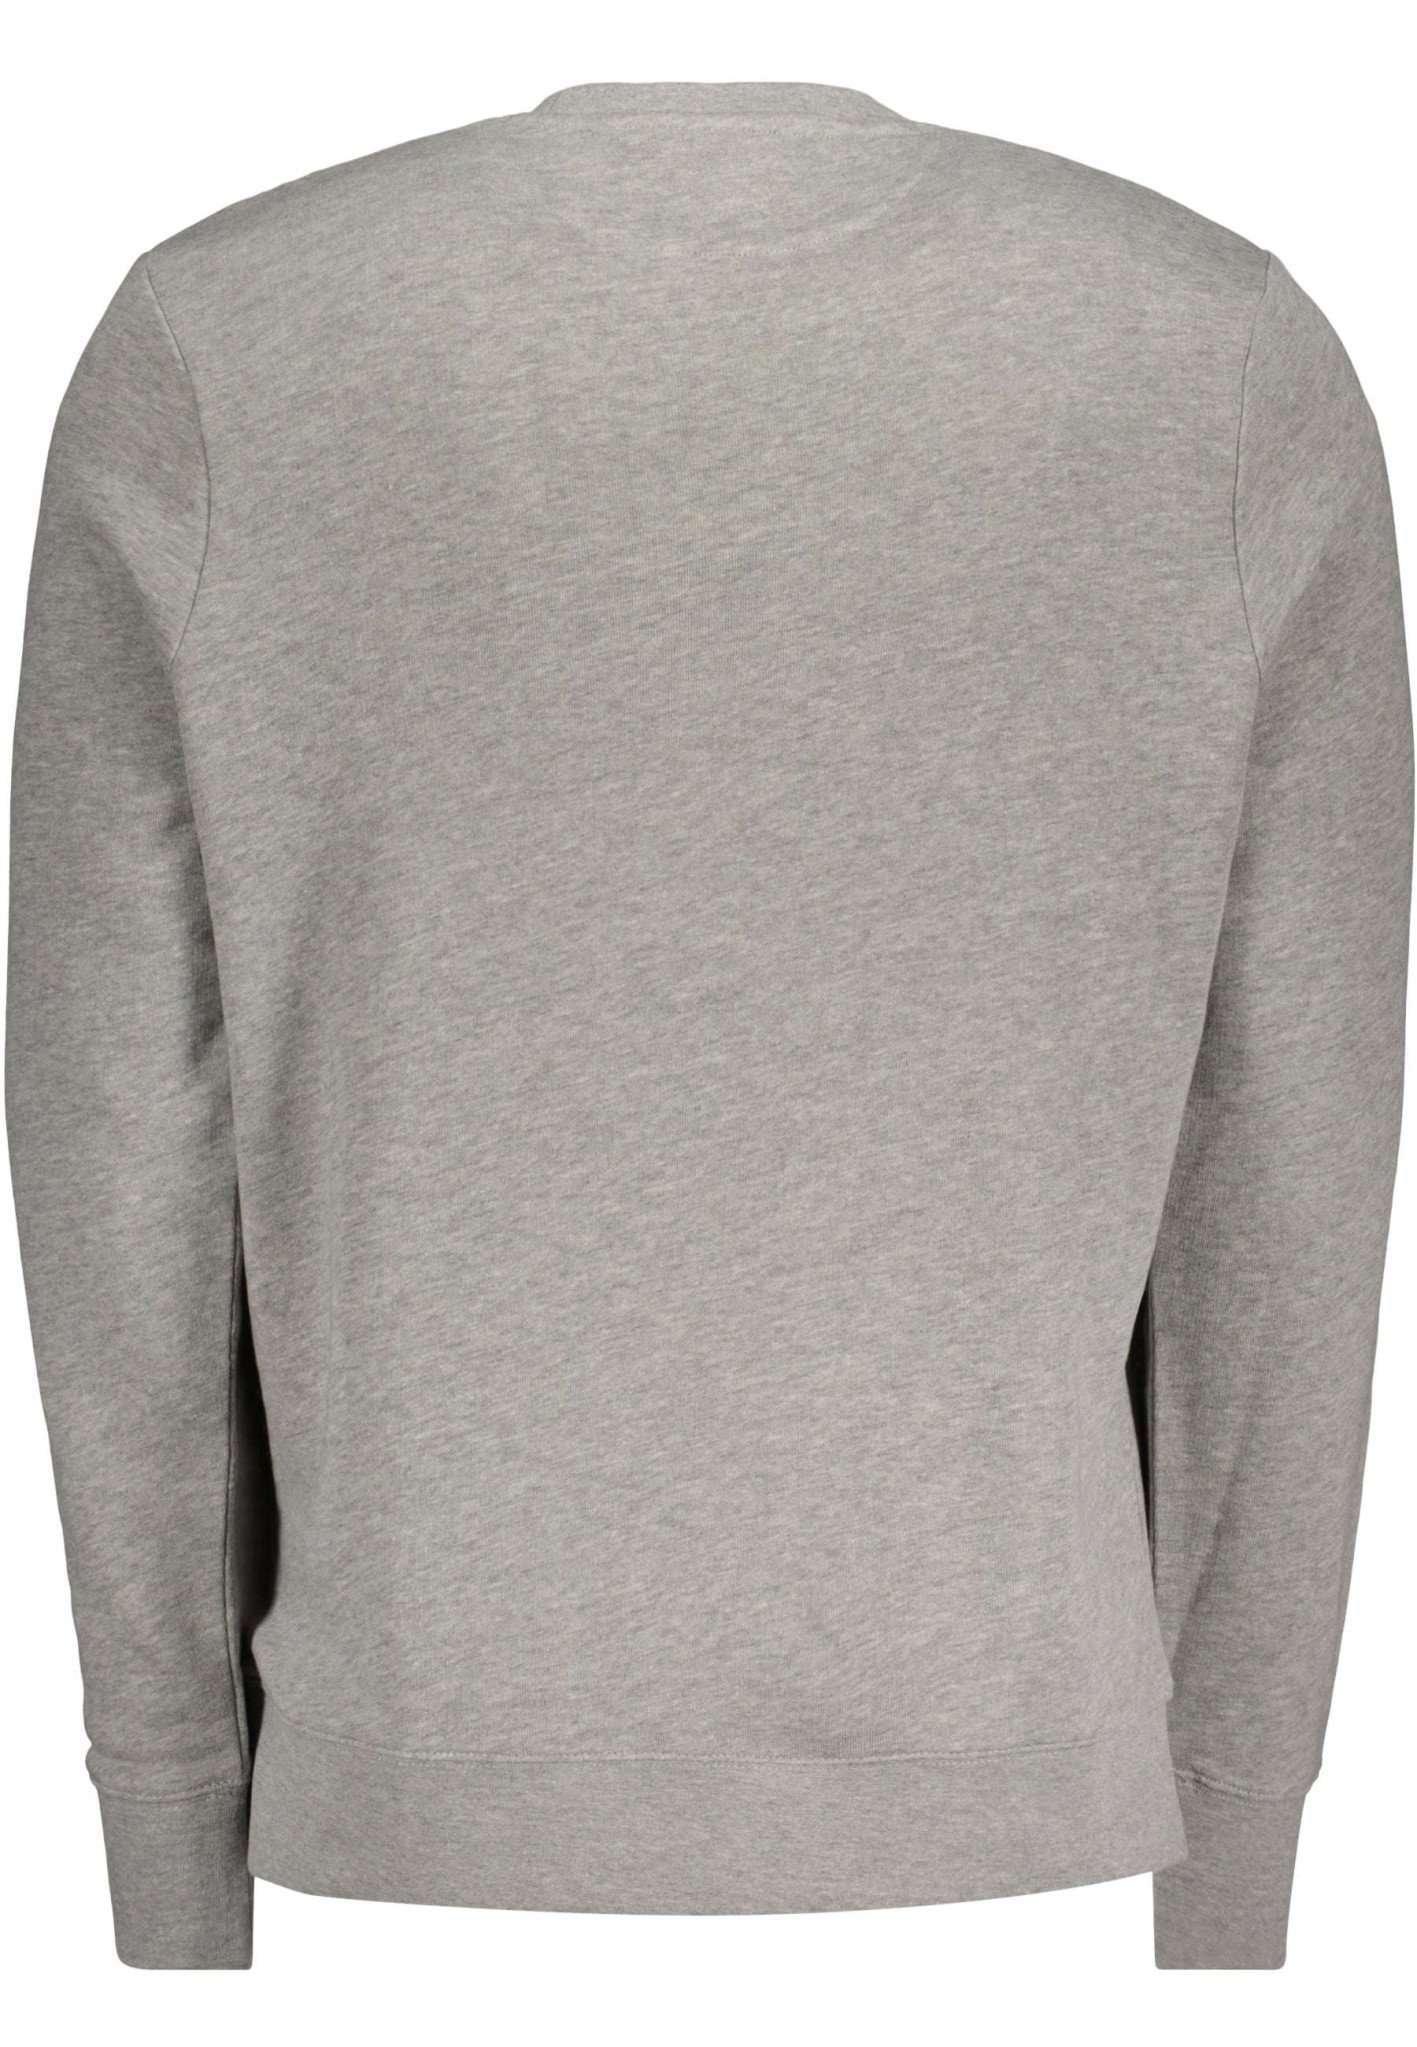 Wrangler  Sweatshirts 3CLR Sign Off Sweatshirt 